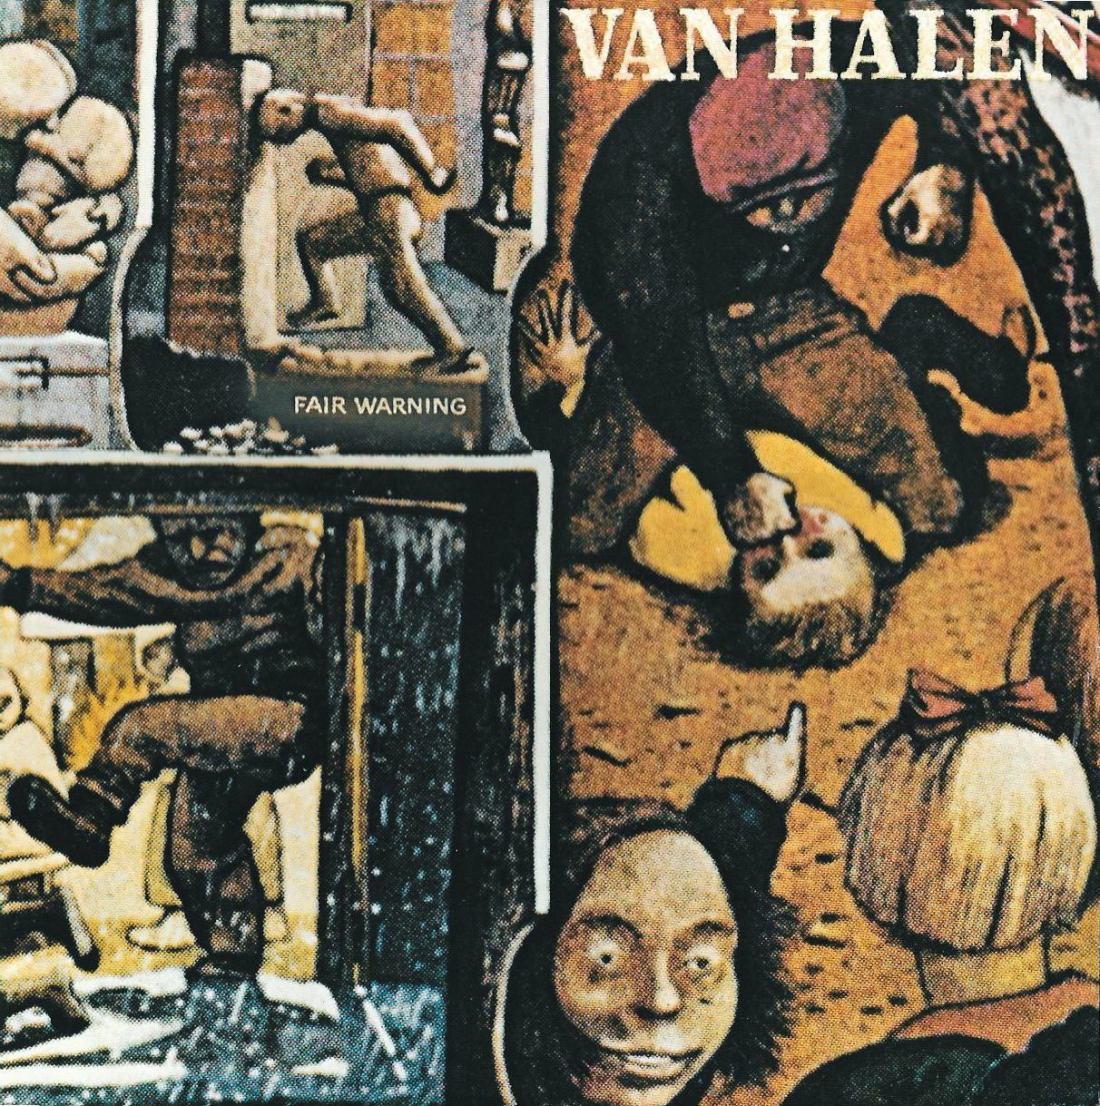 Van Halen_Fair Warning_1